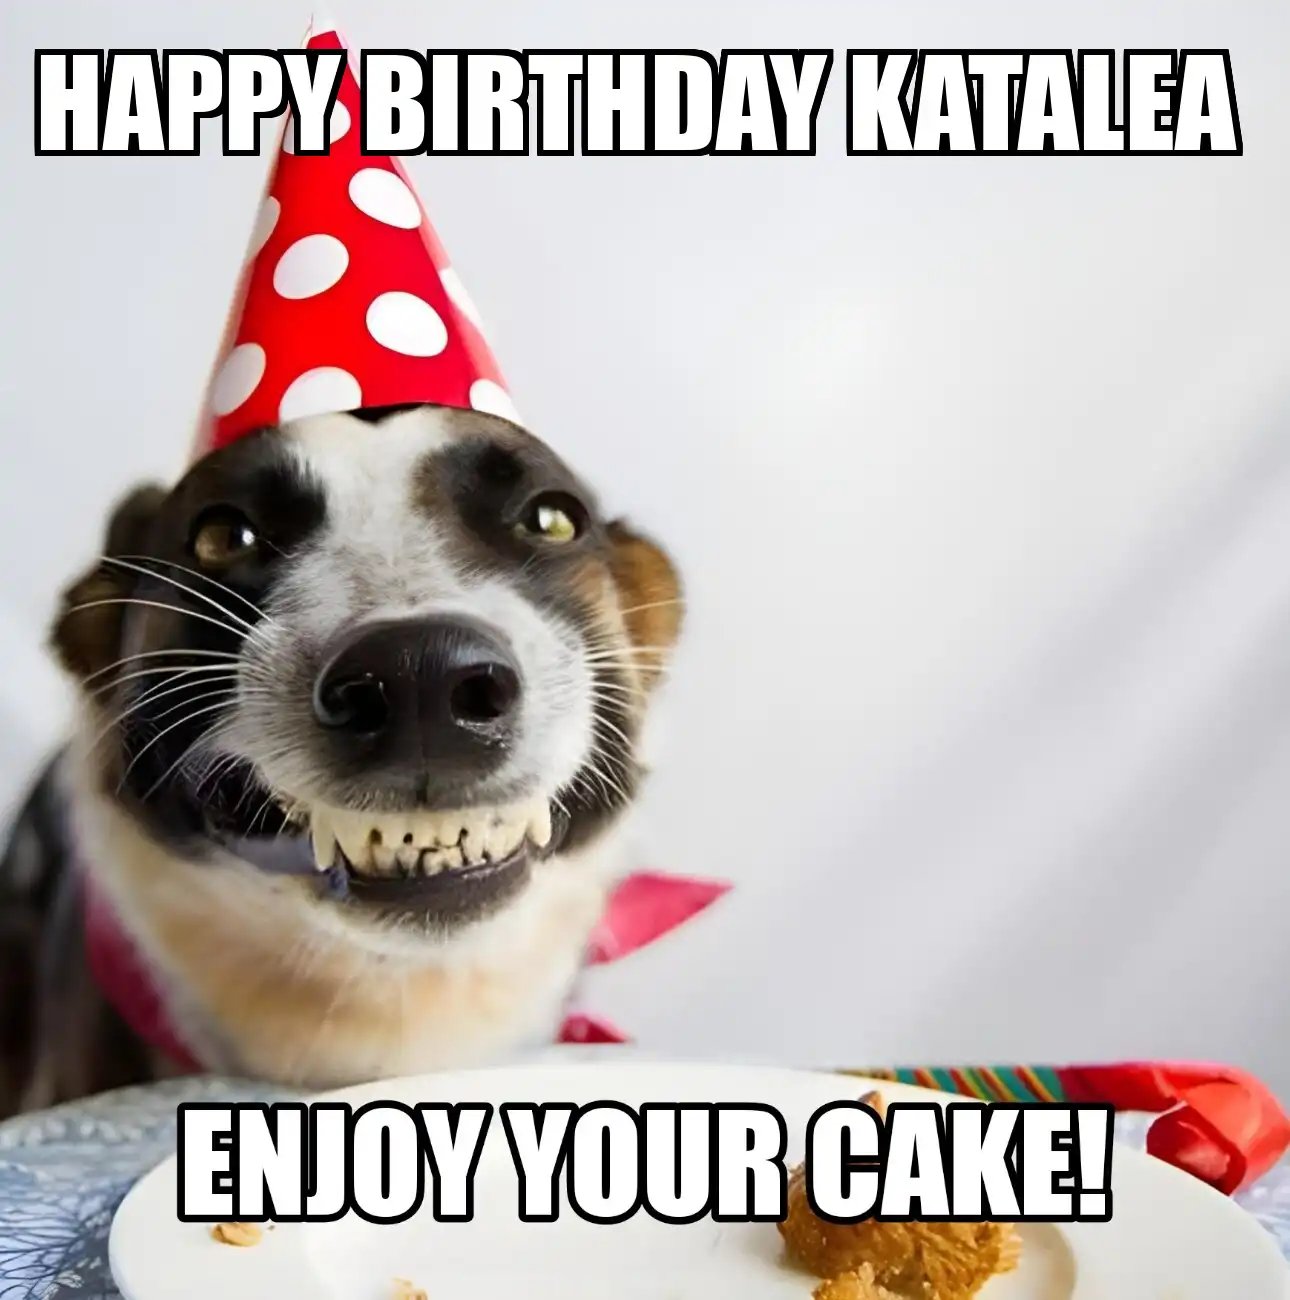 Happy Birthday Katalea Enjoy Your Cake Dog Meme